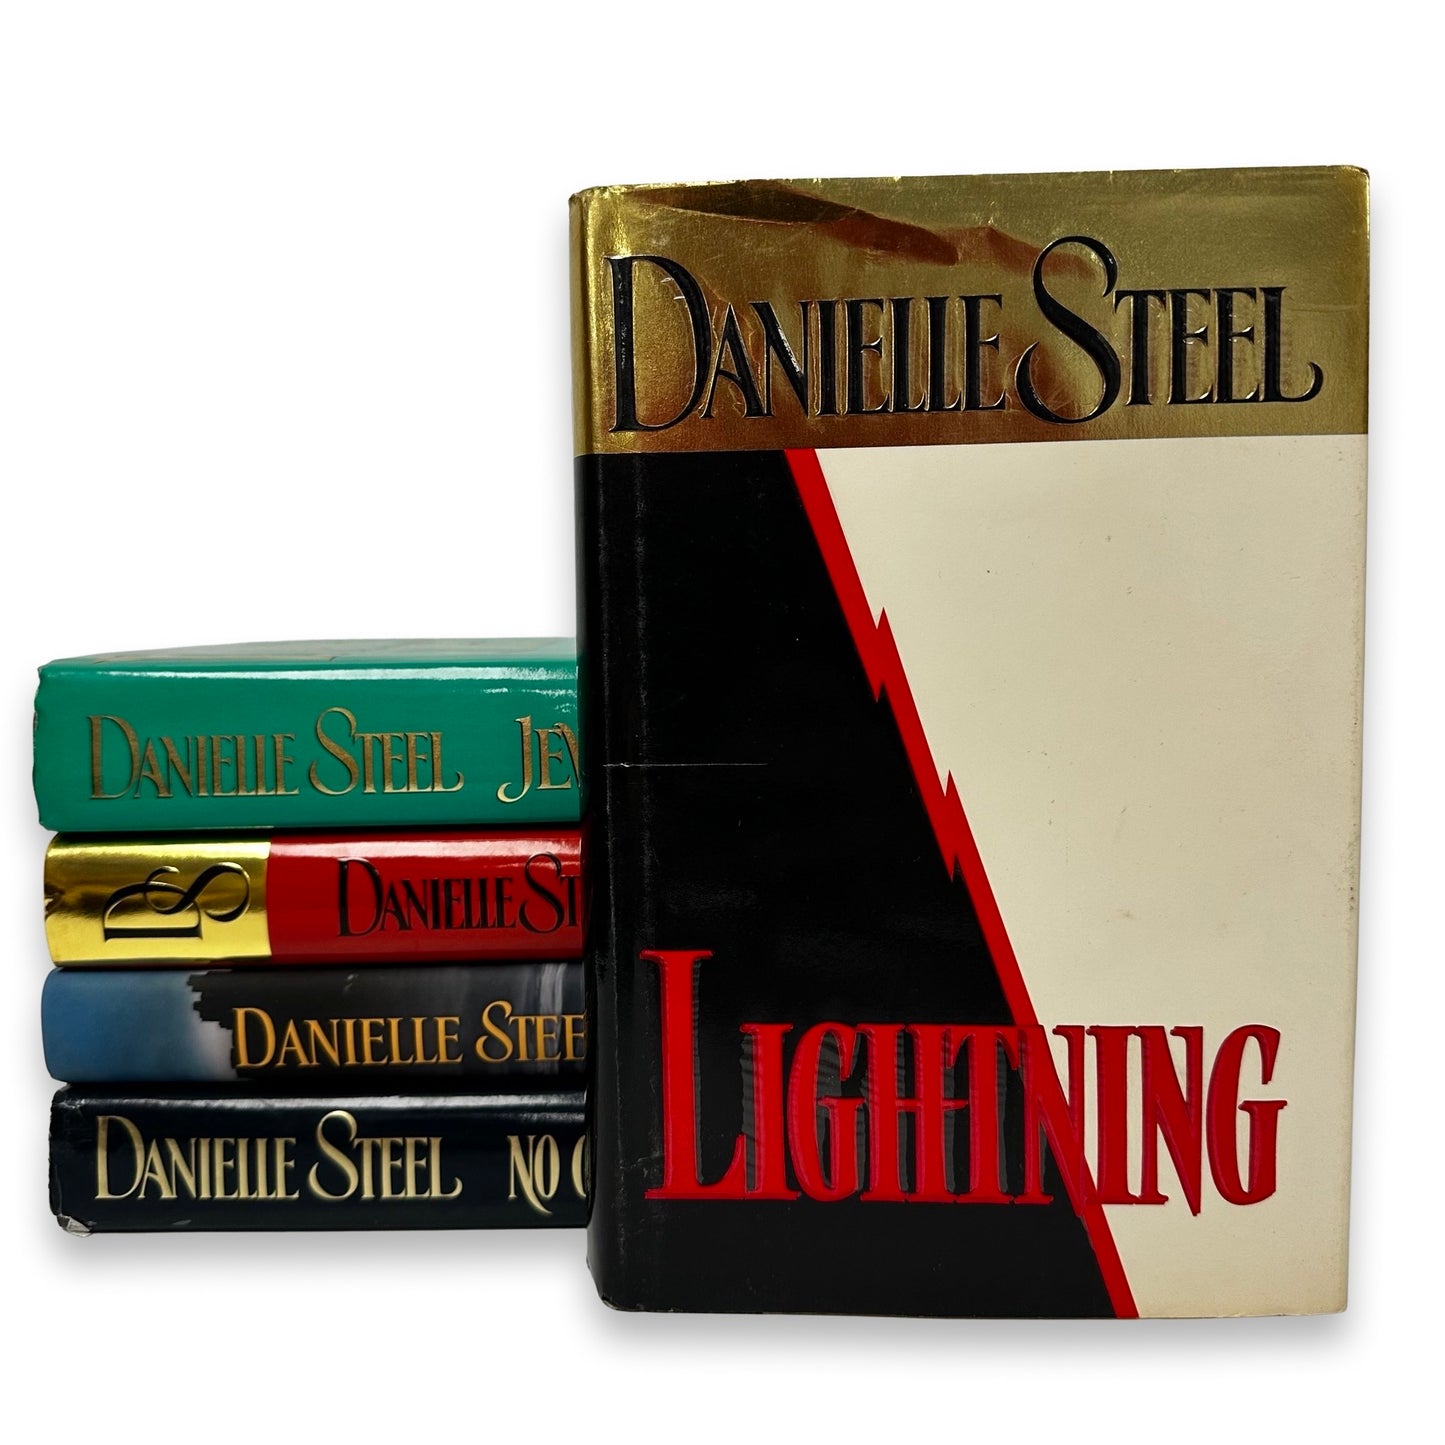 Danielle Steel books - Hardcovers